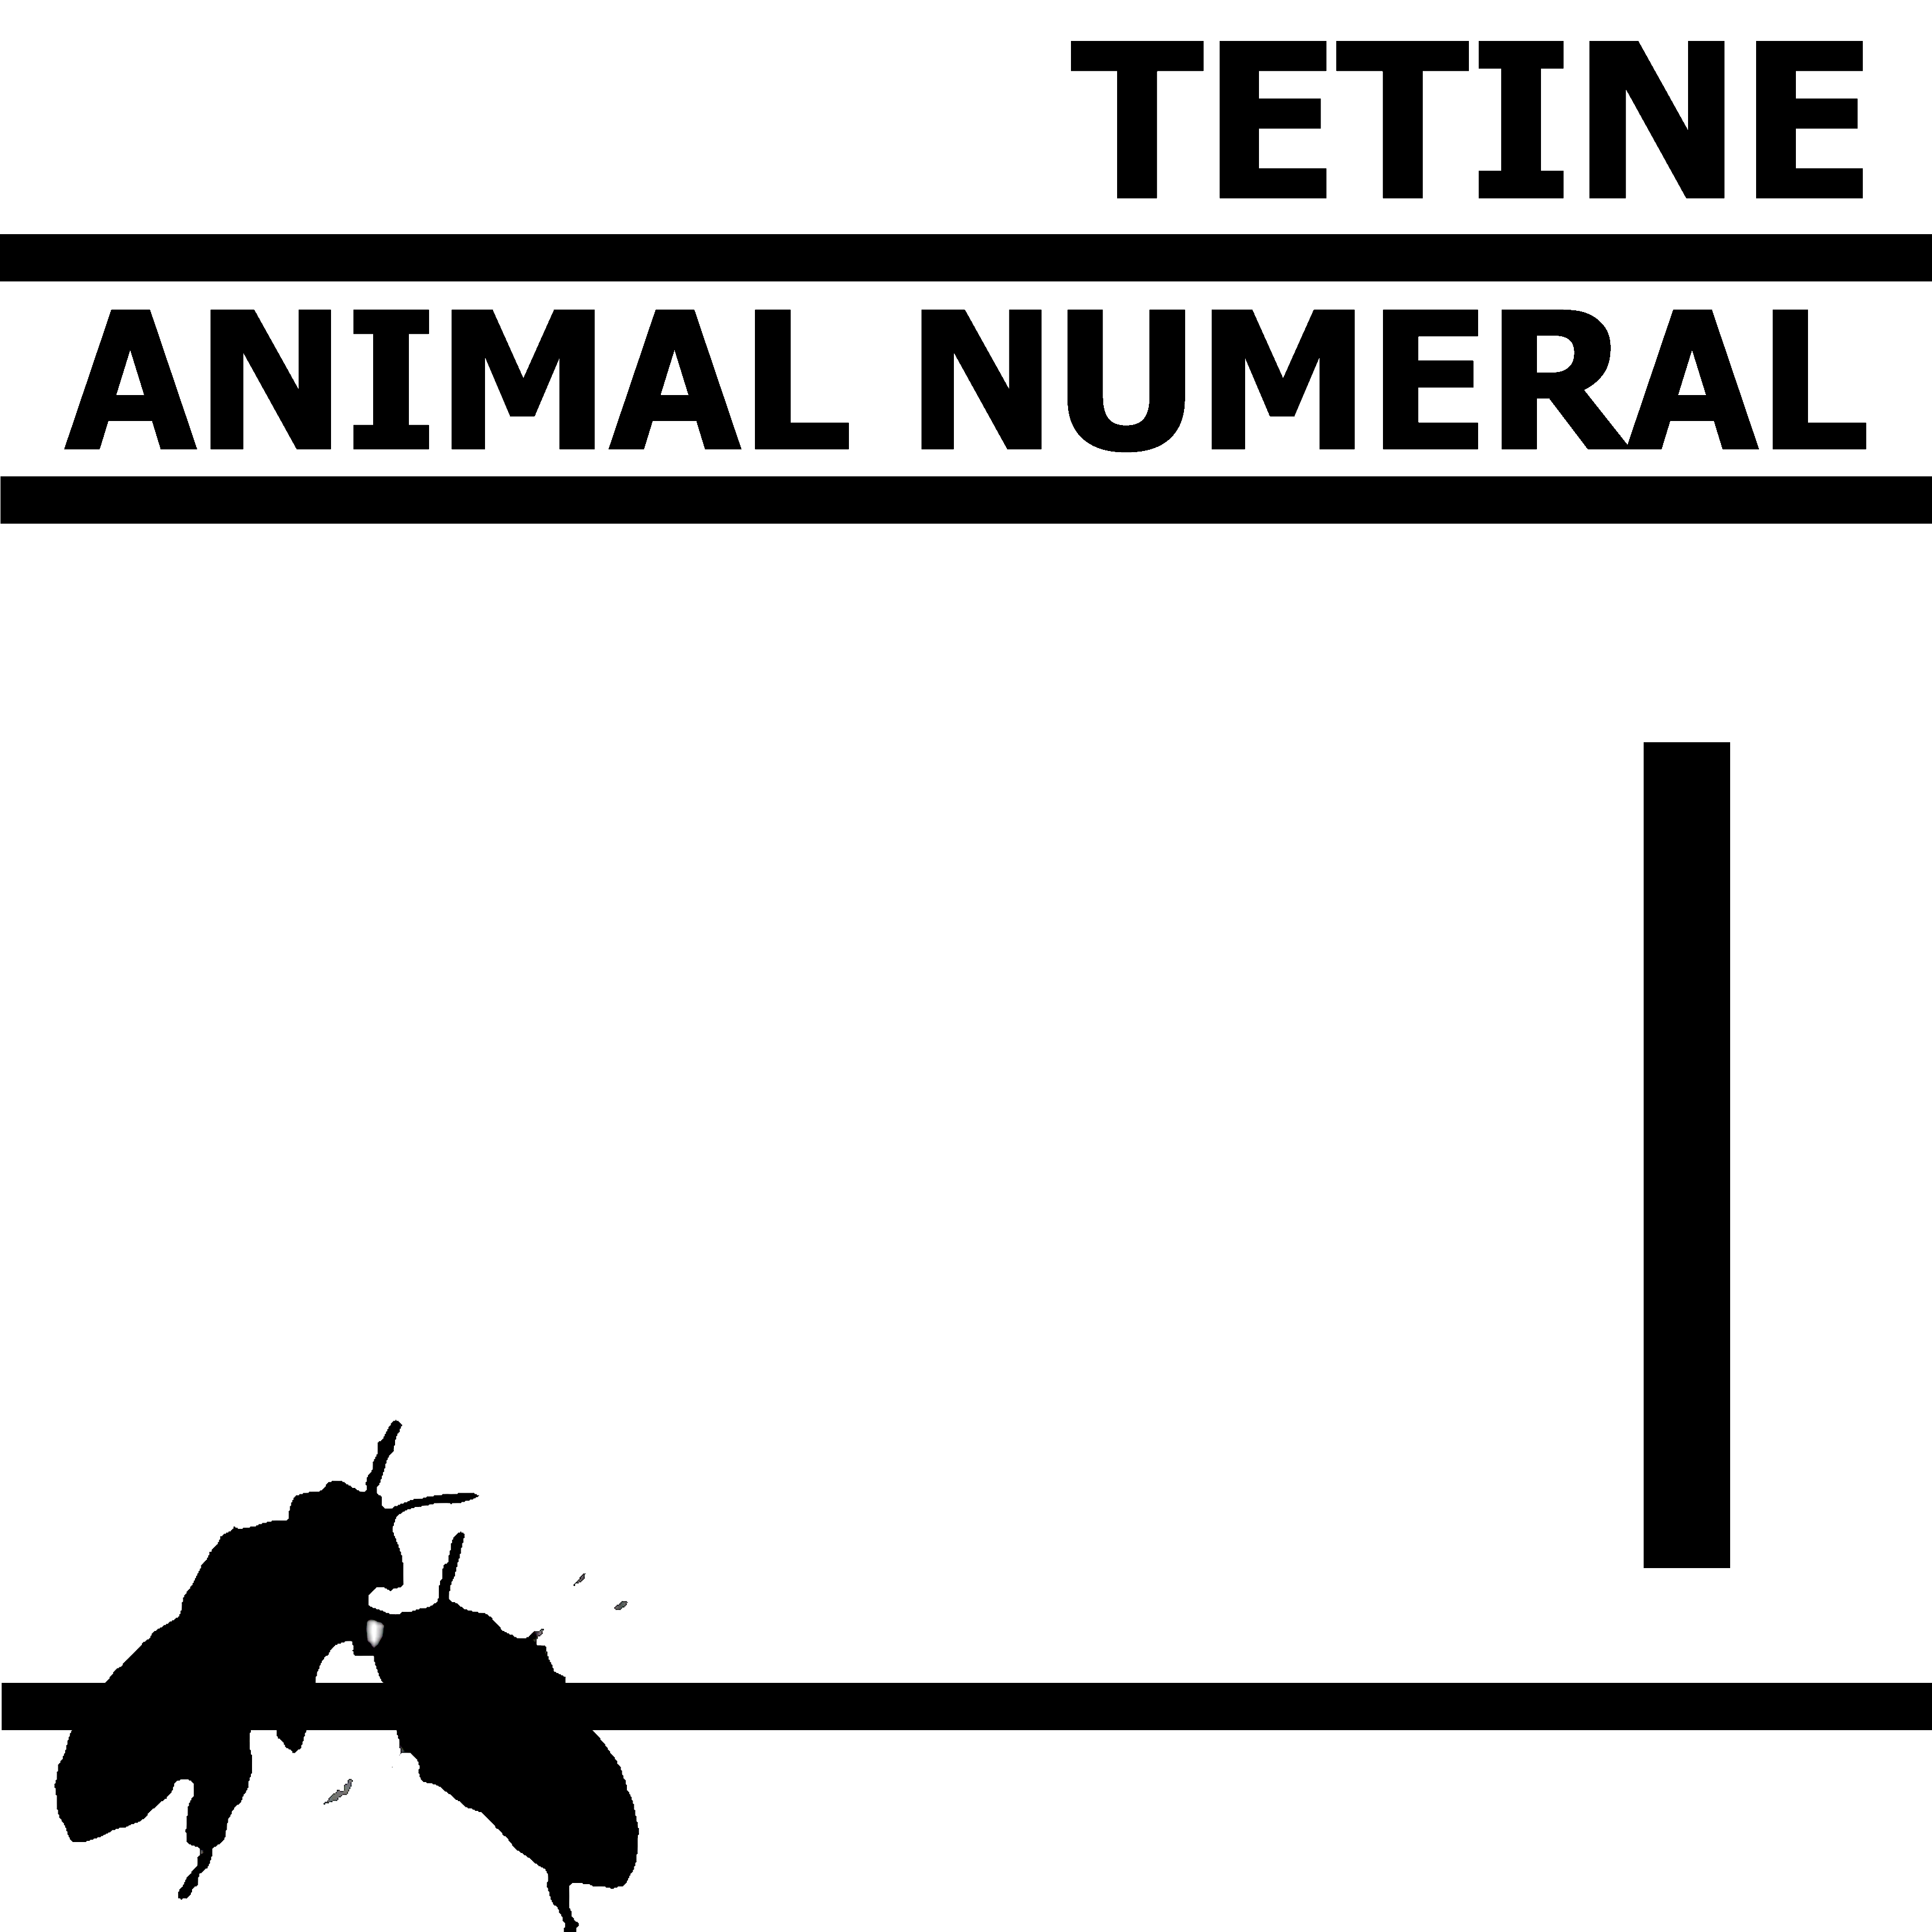 "Animal Numeral" (2019), do duo Tetine